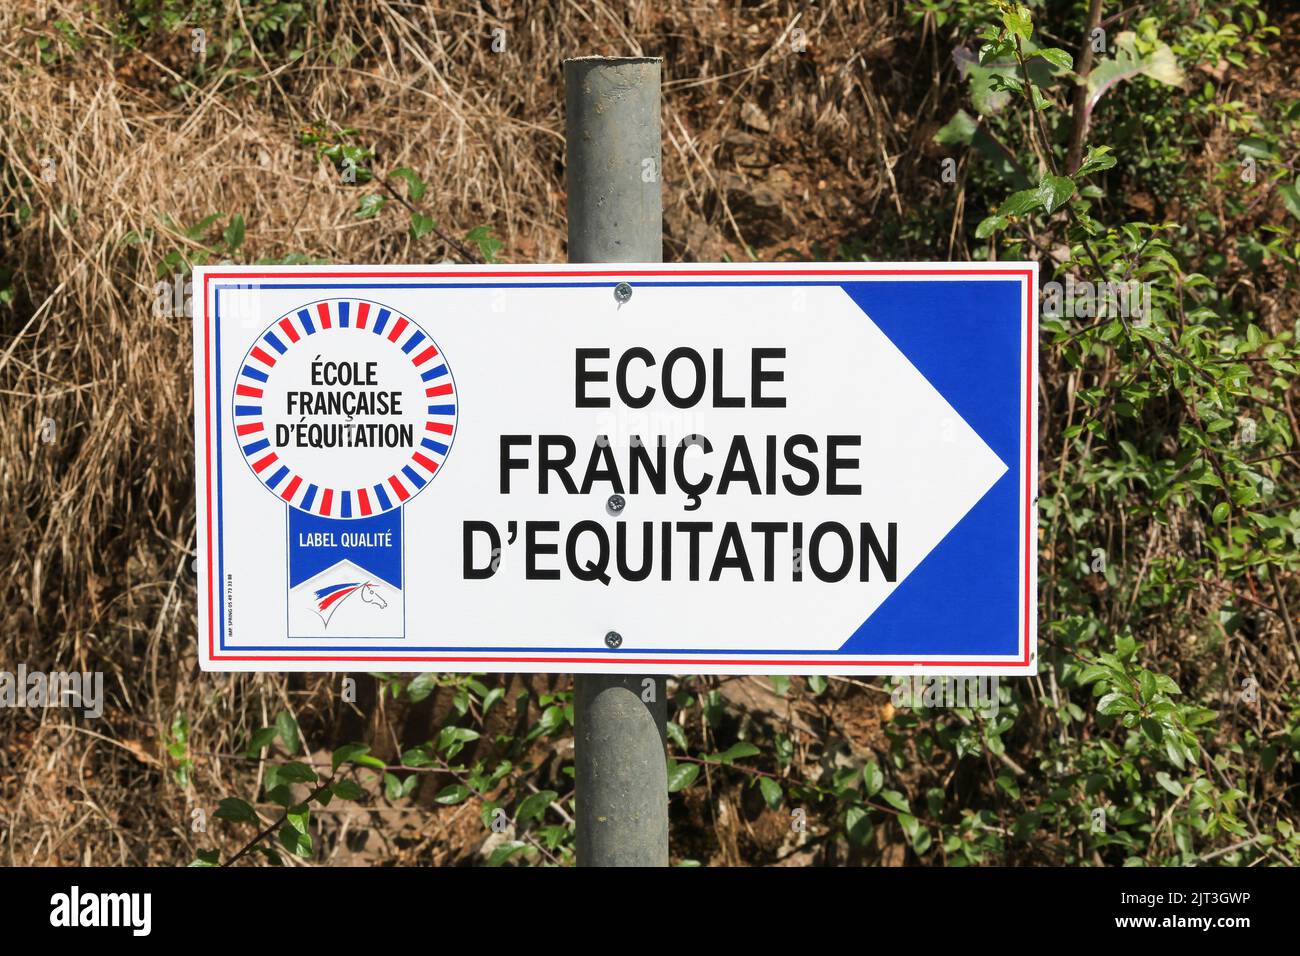 Legny, Francia - 20 de junio de 2020: Escuela francesa de equitación llamada ecole francaise d'equitation en lengua francesa Foto de stock